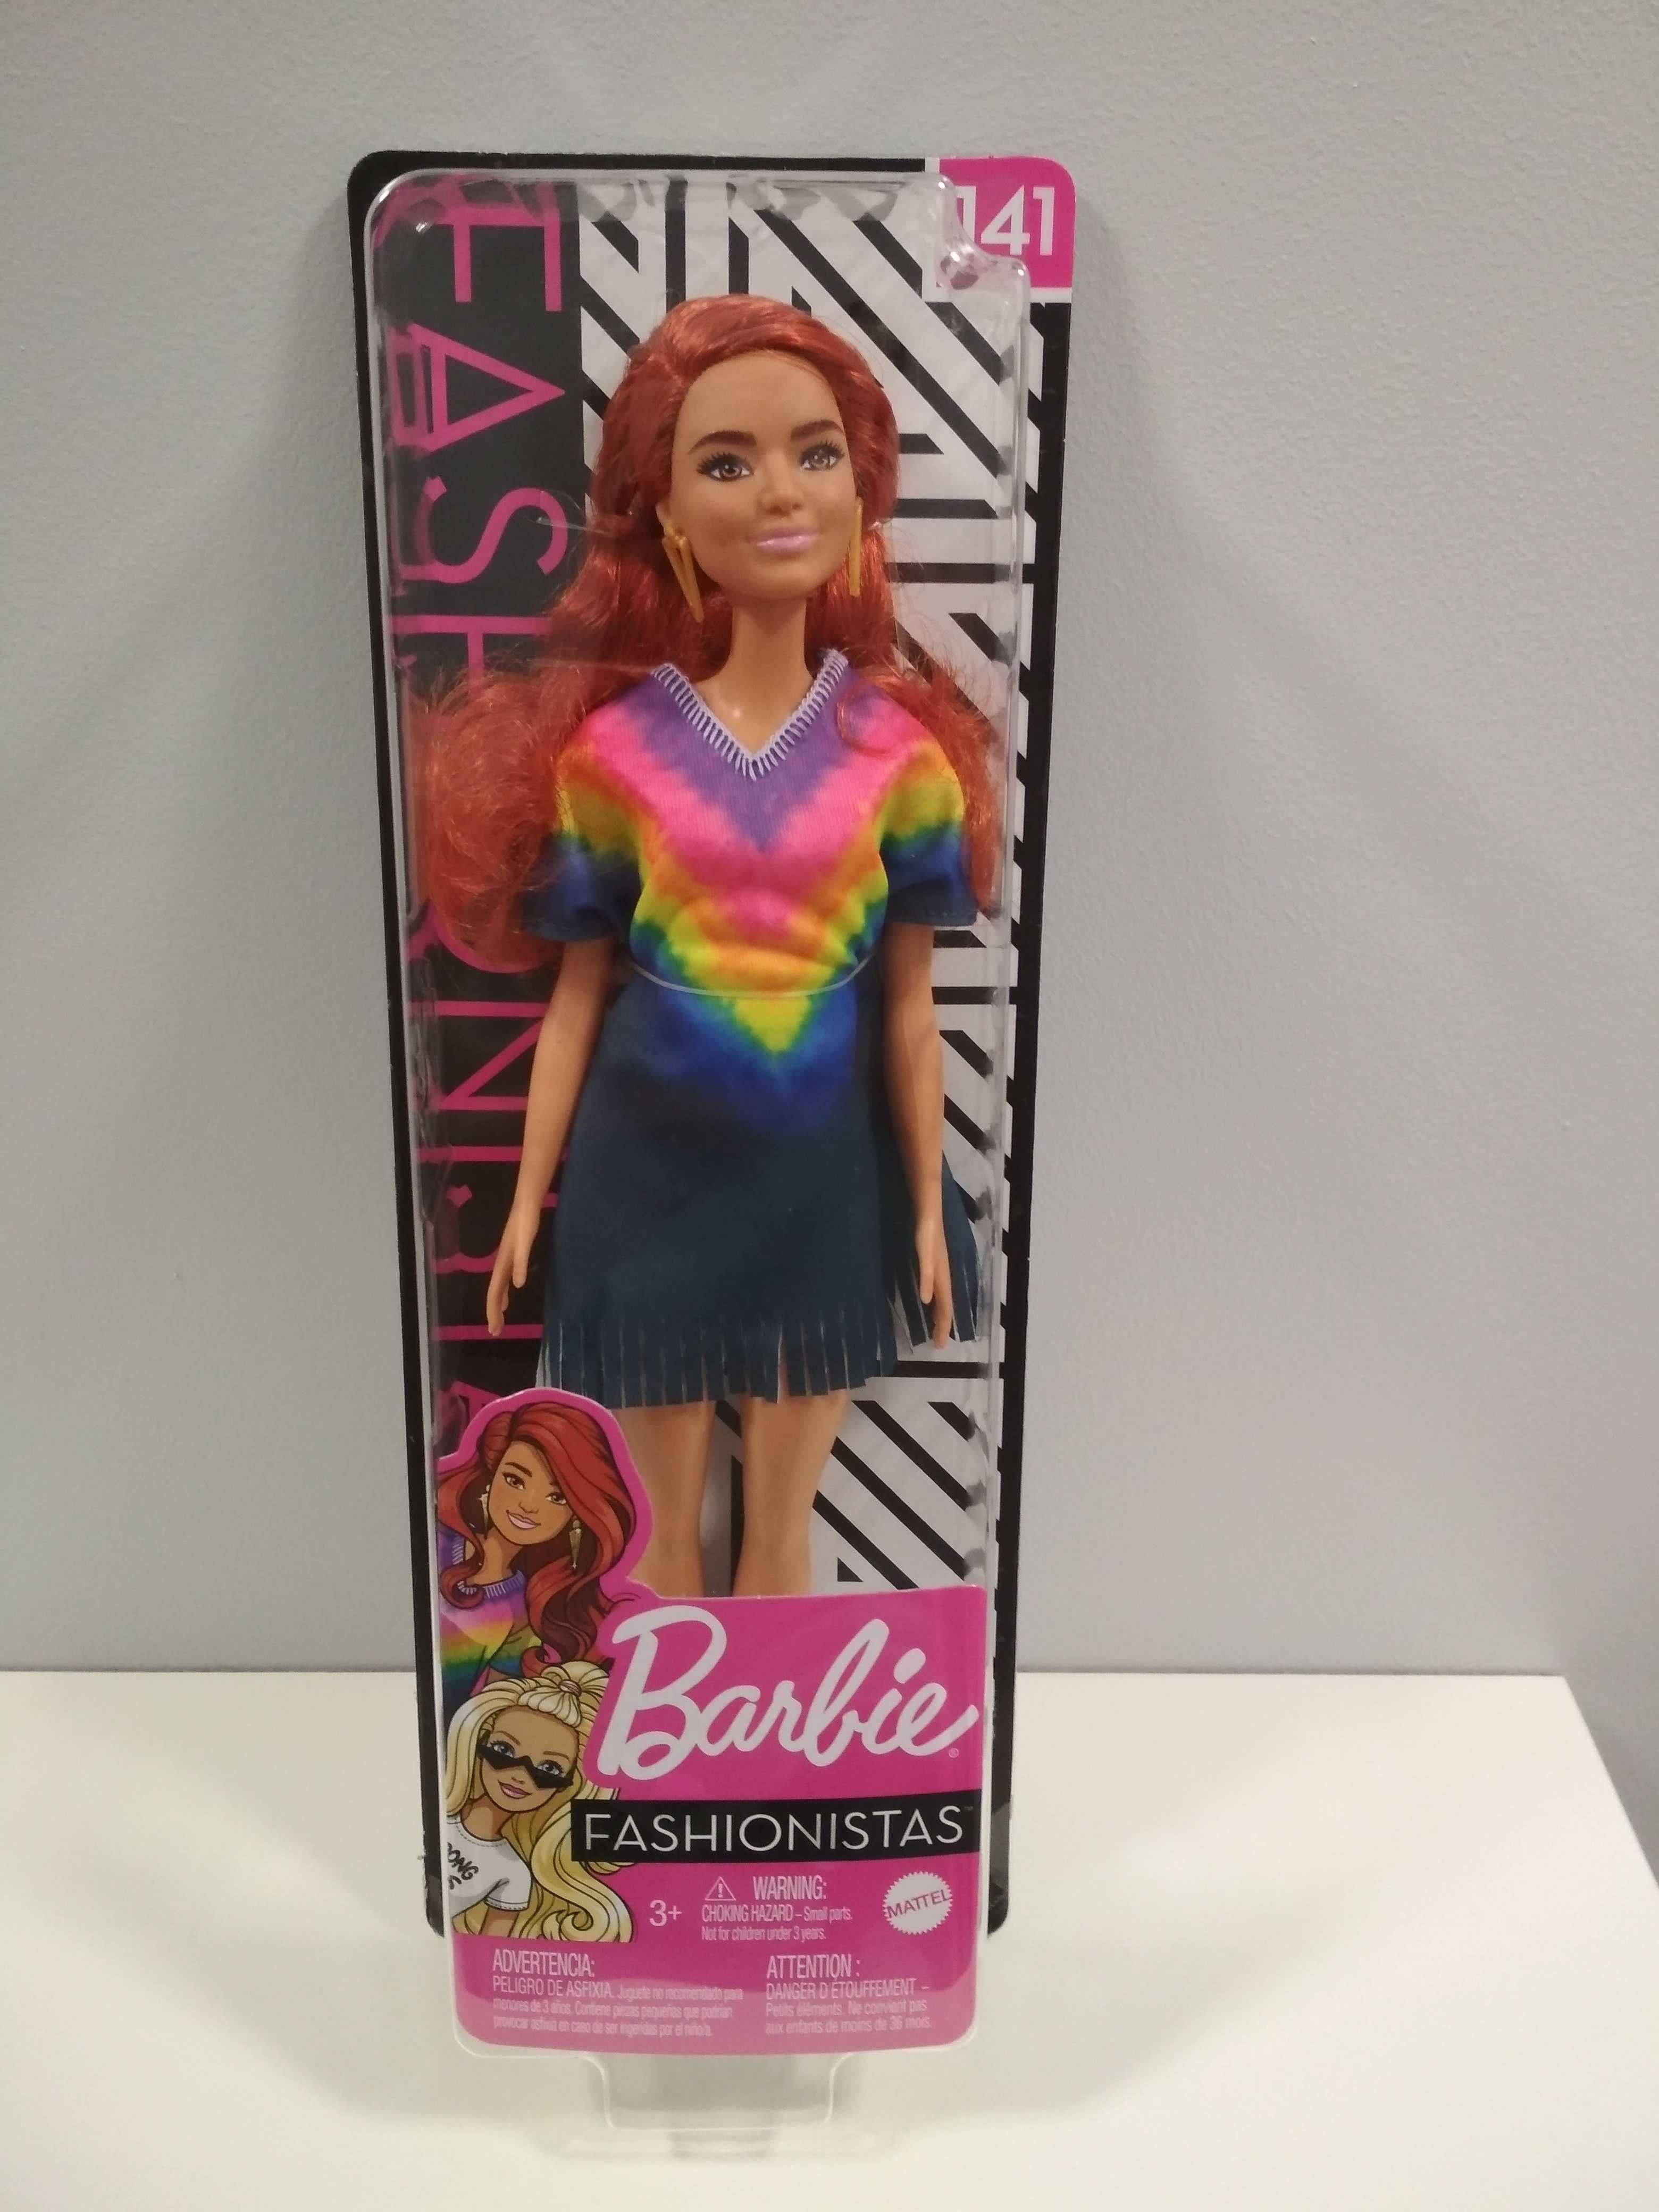 Lalka Barbie Fashionistas 141 nowa